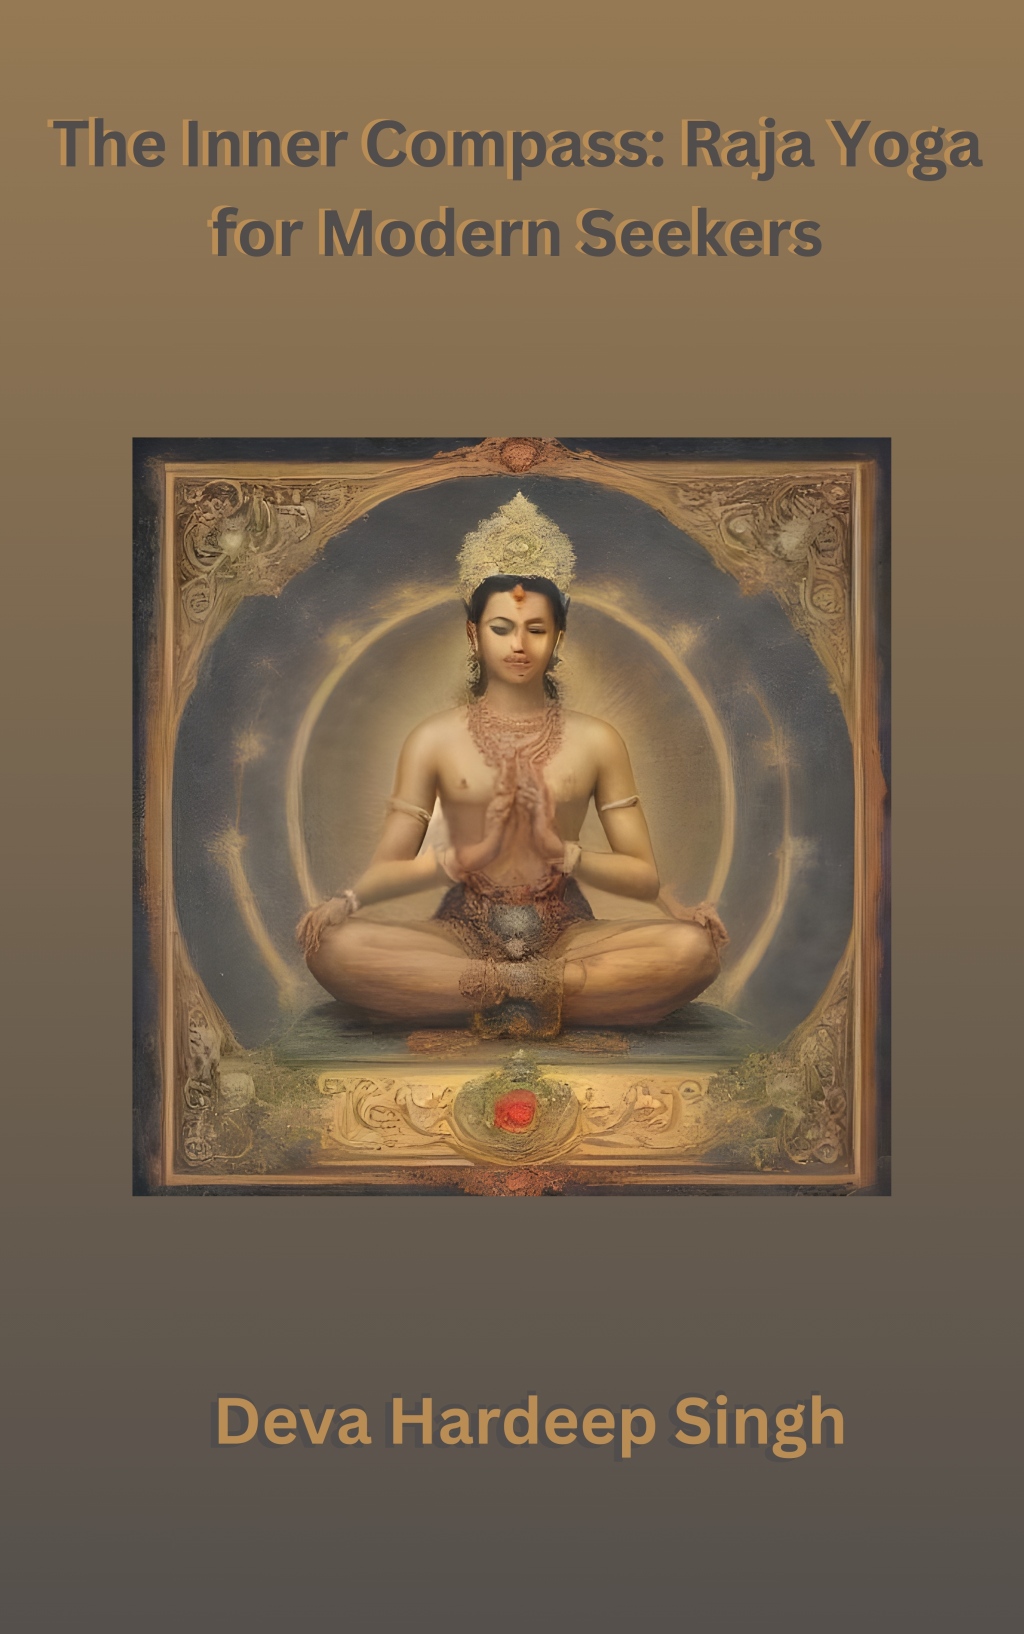 The Inner Compass: Raja Yoga for Modern Seekers